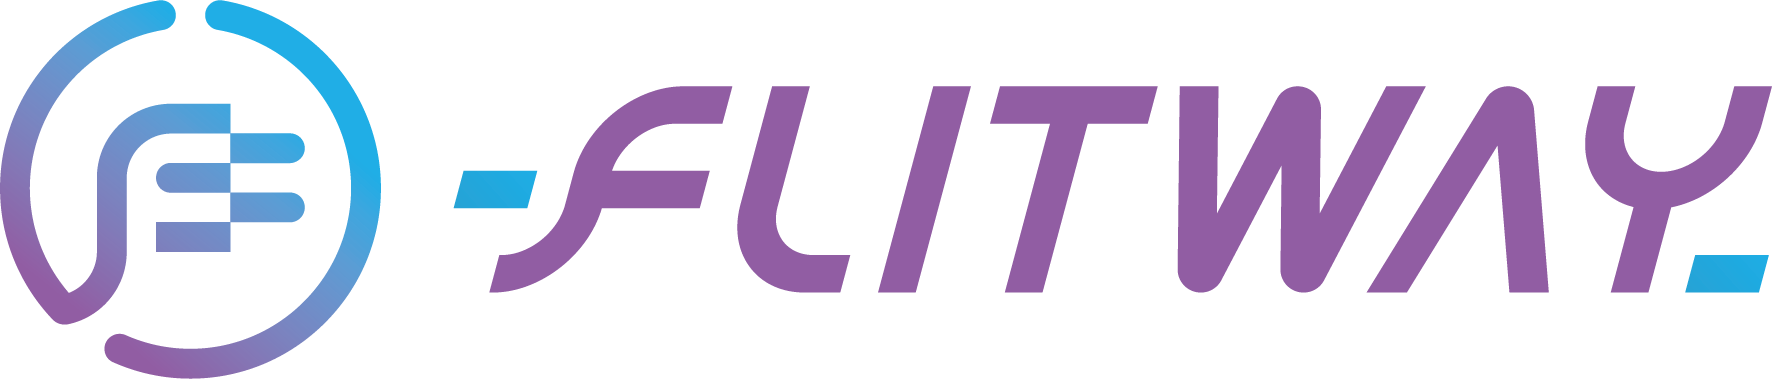 Flitway logo